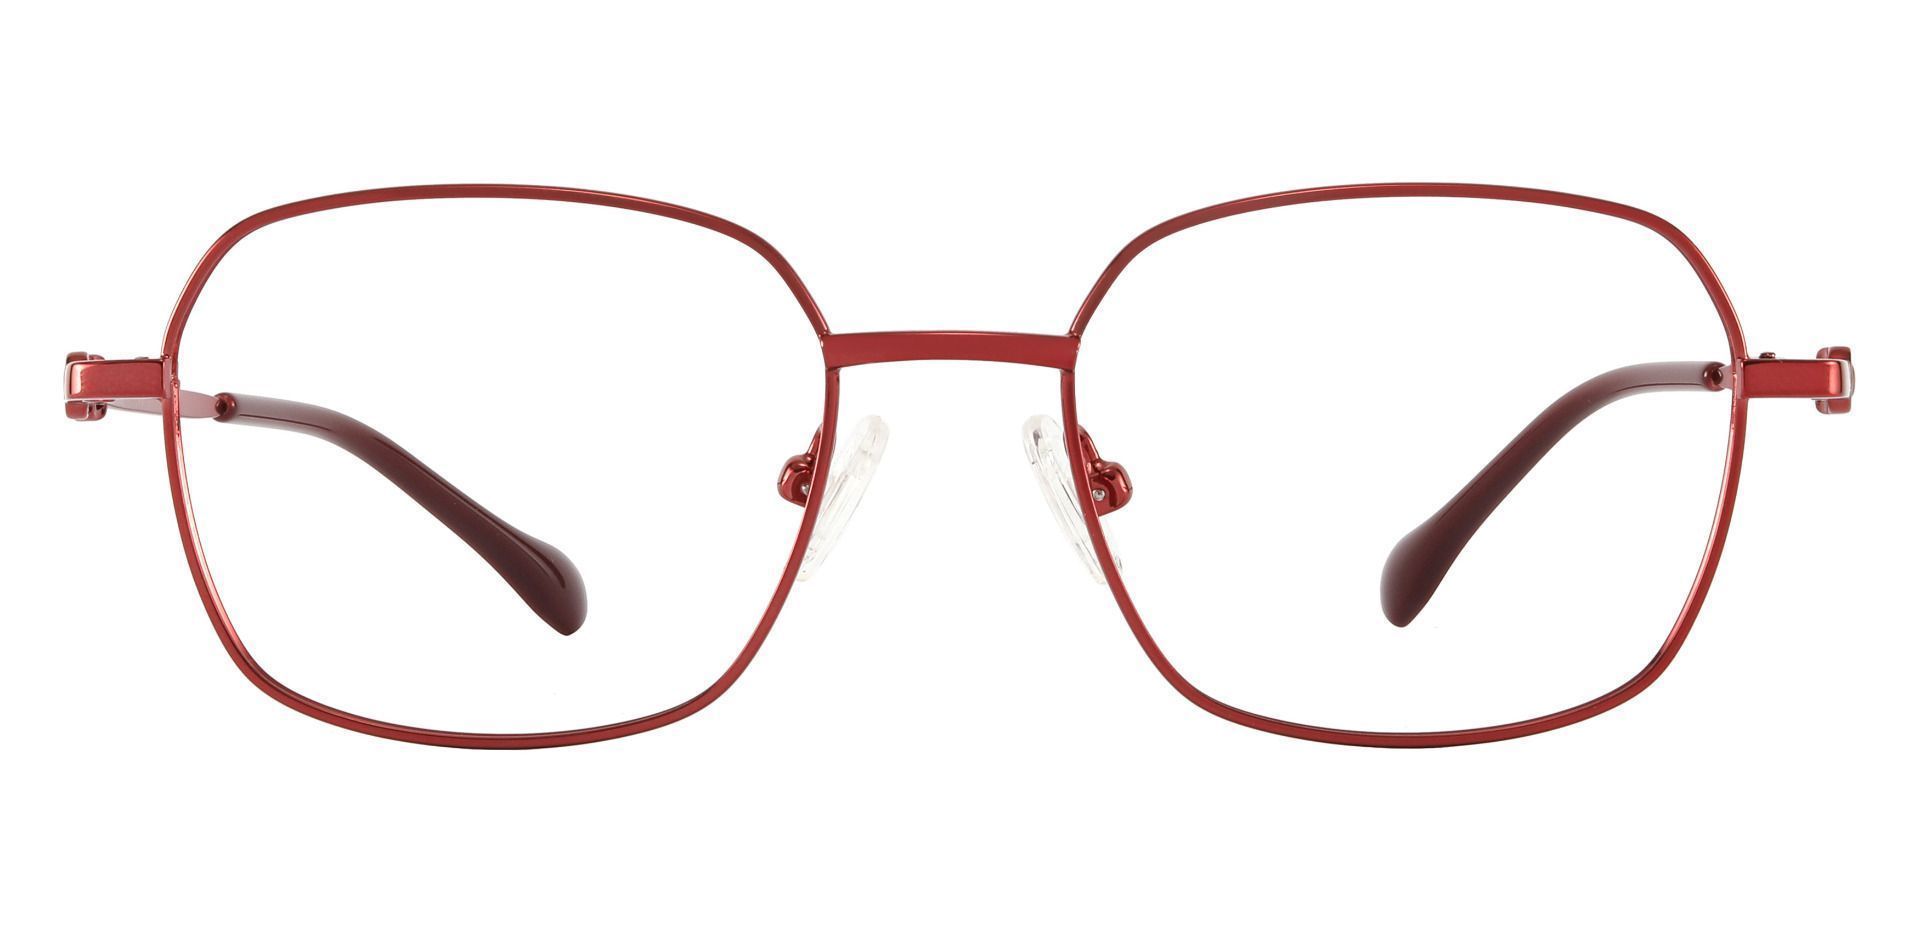 Averill Geometric Reading Glasses - Red